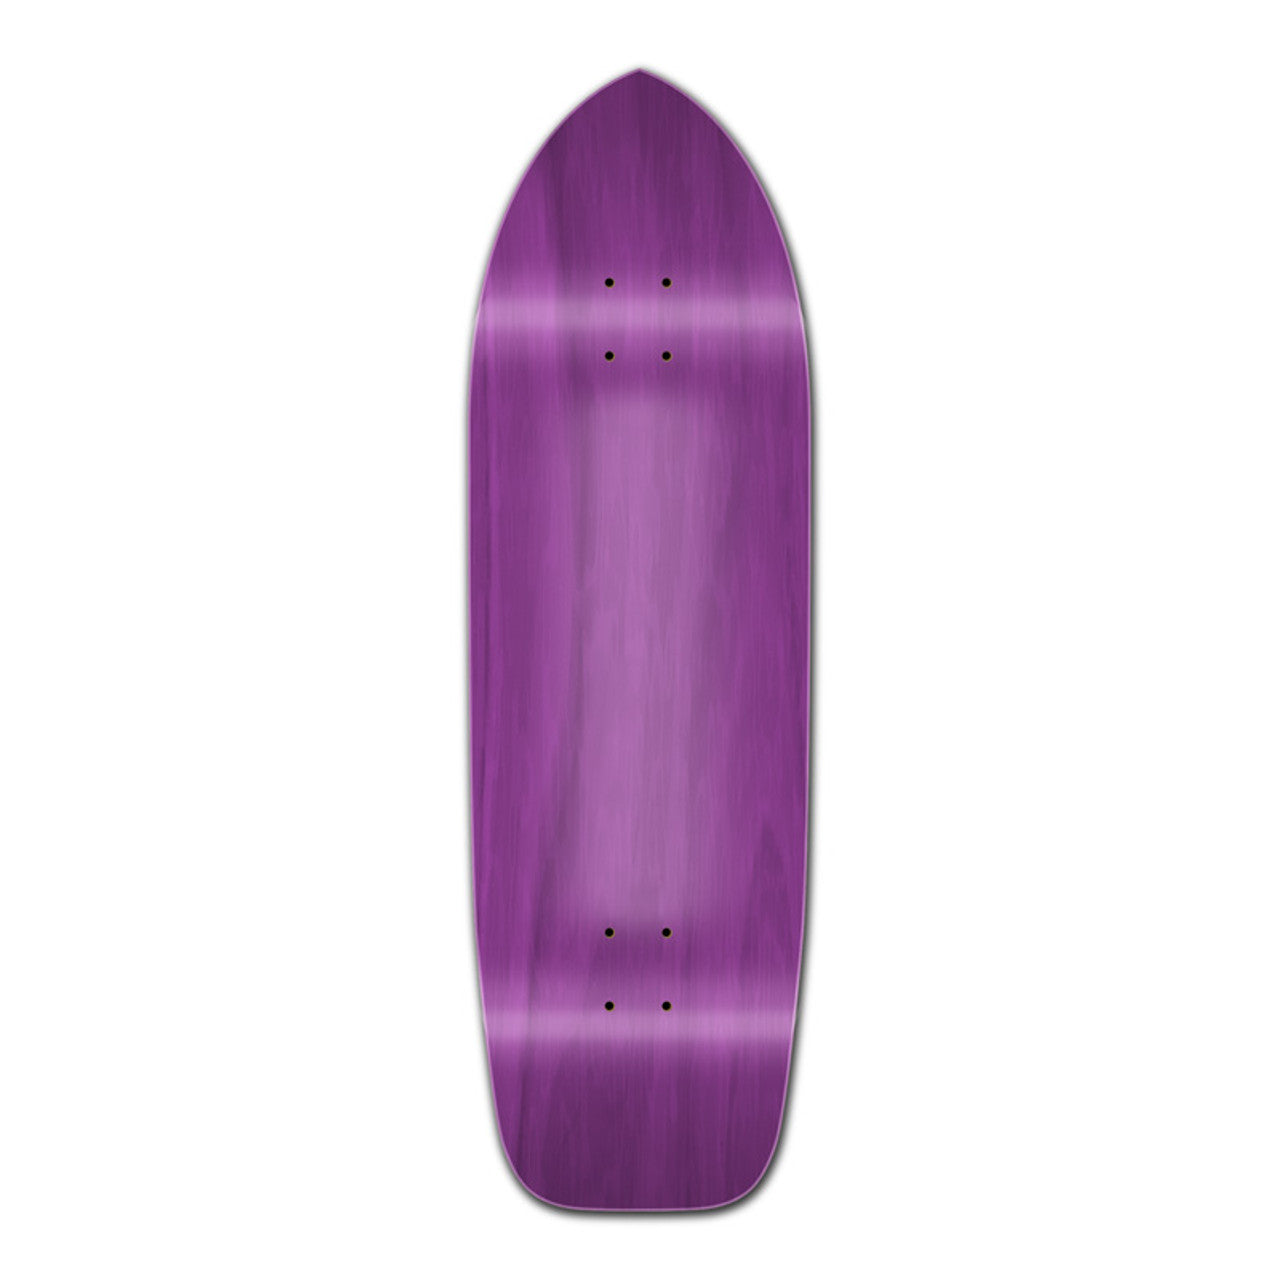 Yocaher Old School Longboard Deck - Stained Purple